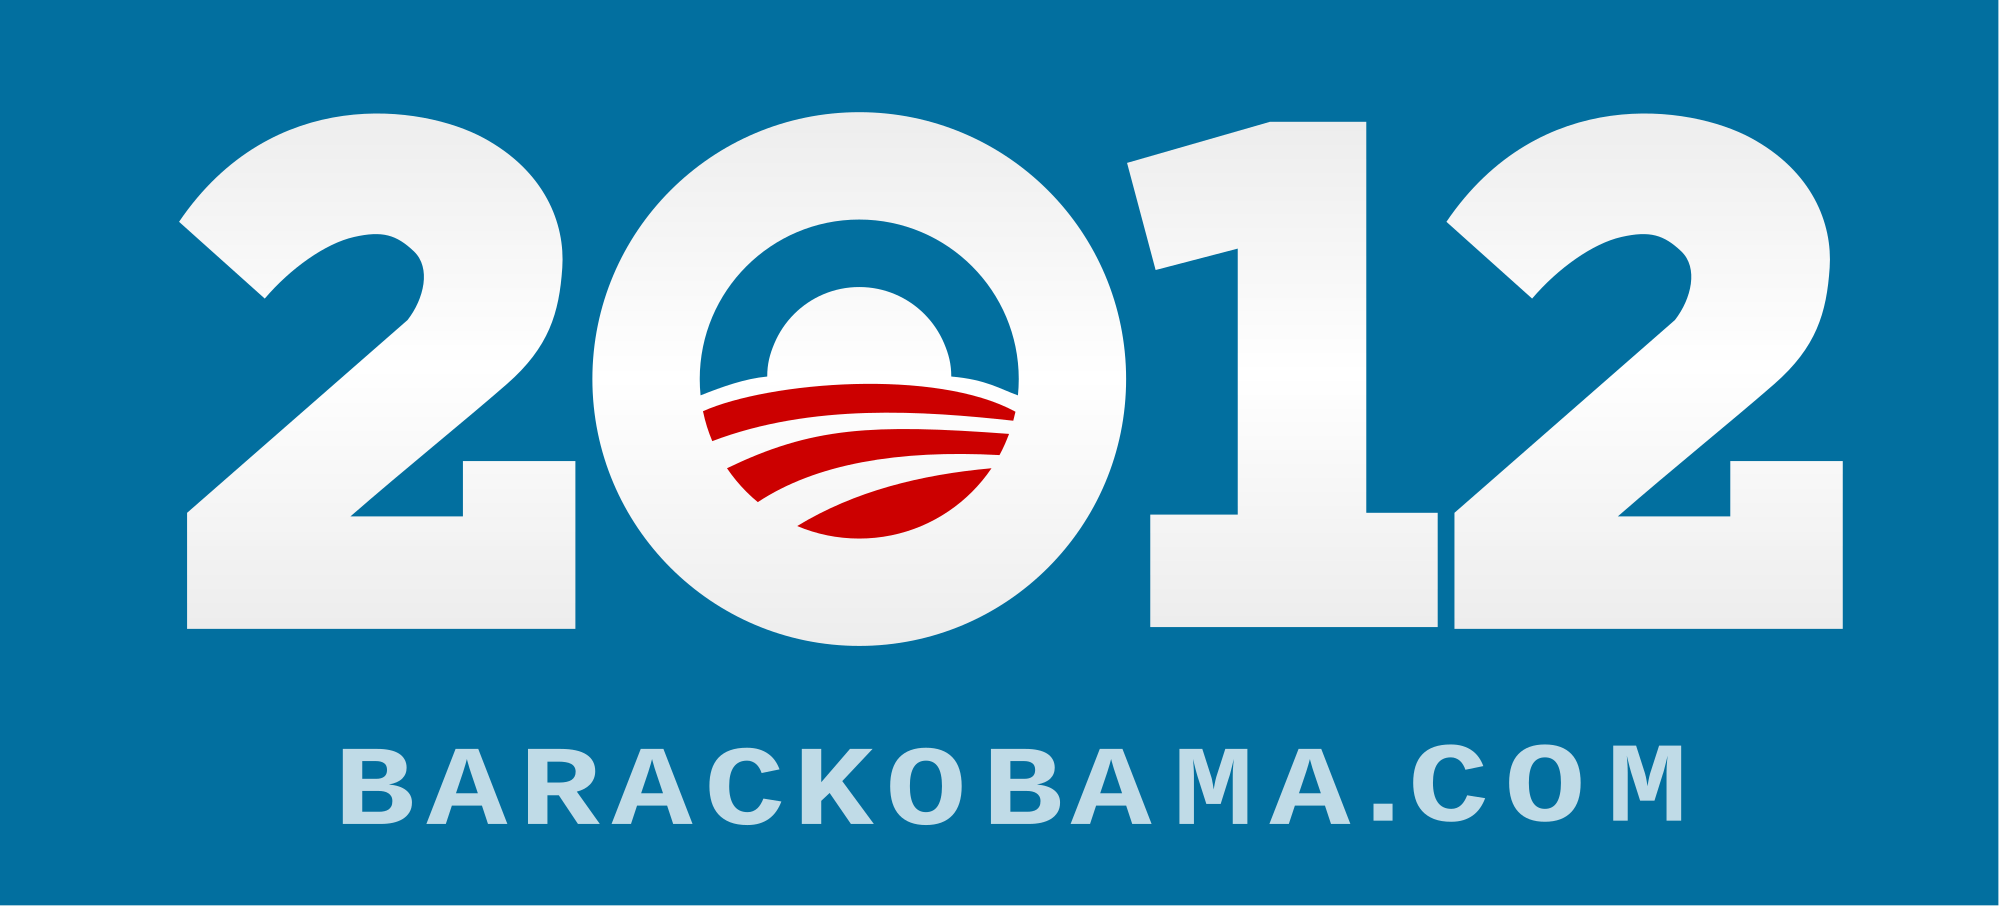 Small Obama Logo - Barack Obama 2012 presidential campaign